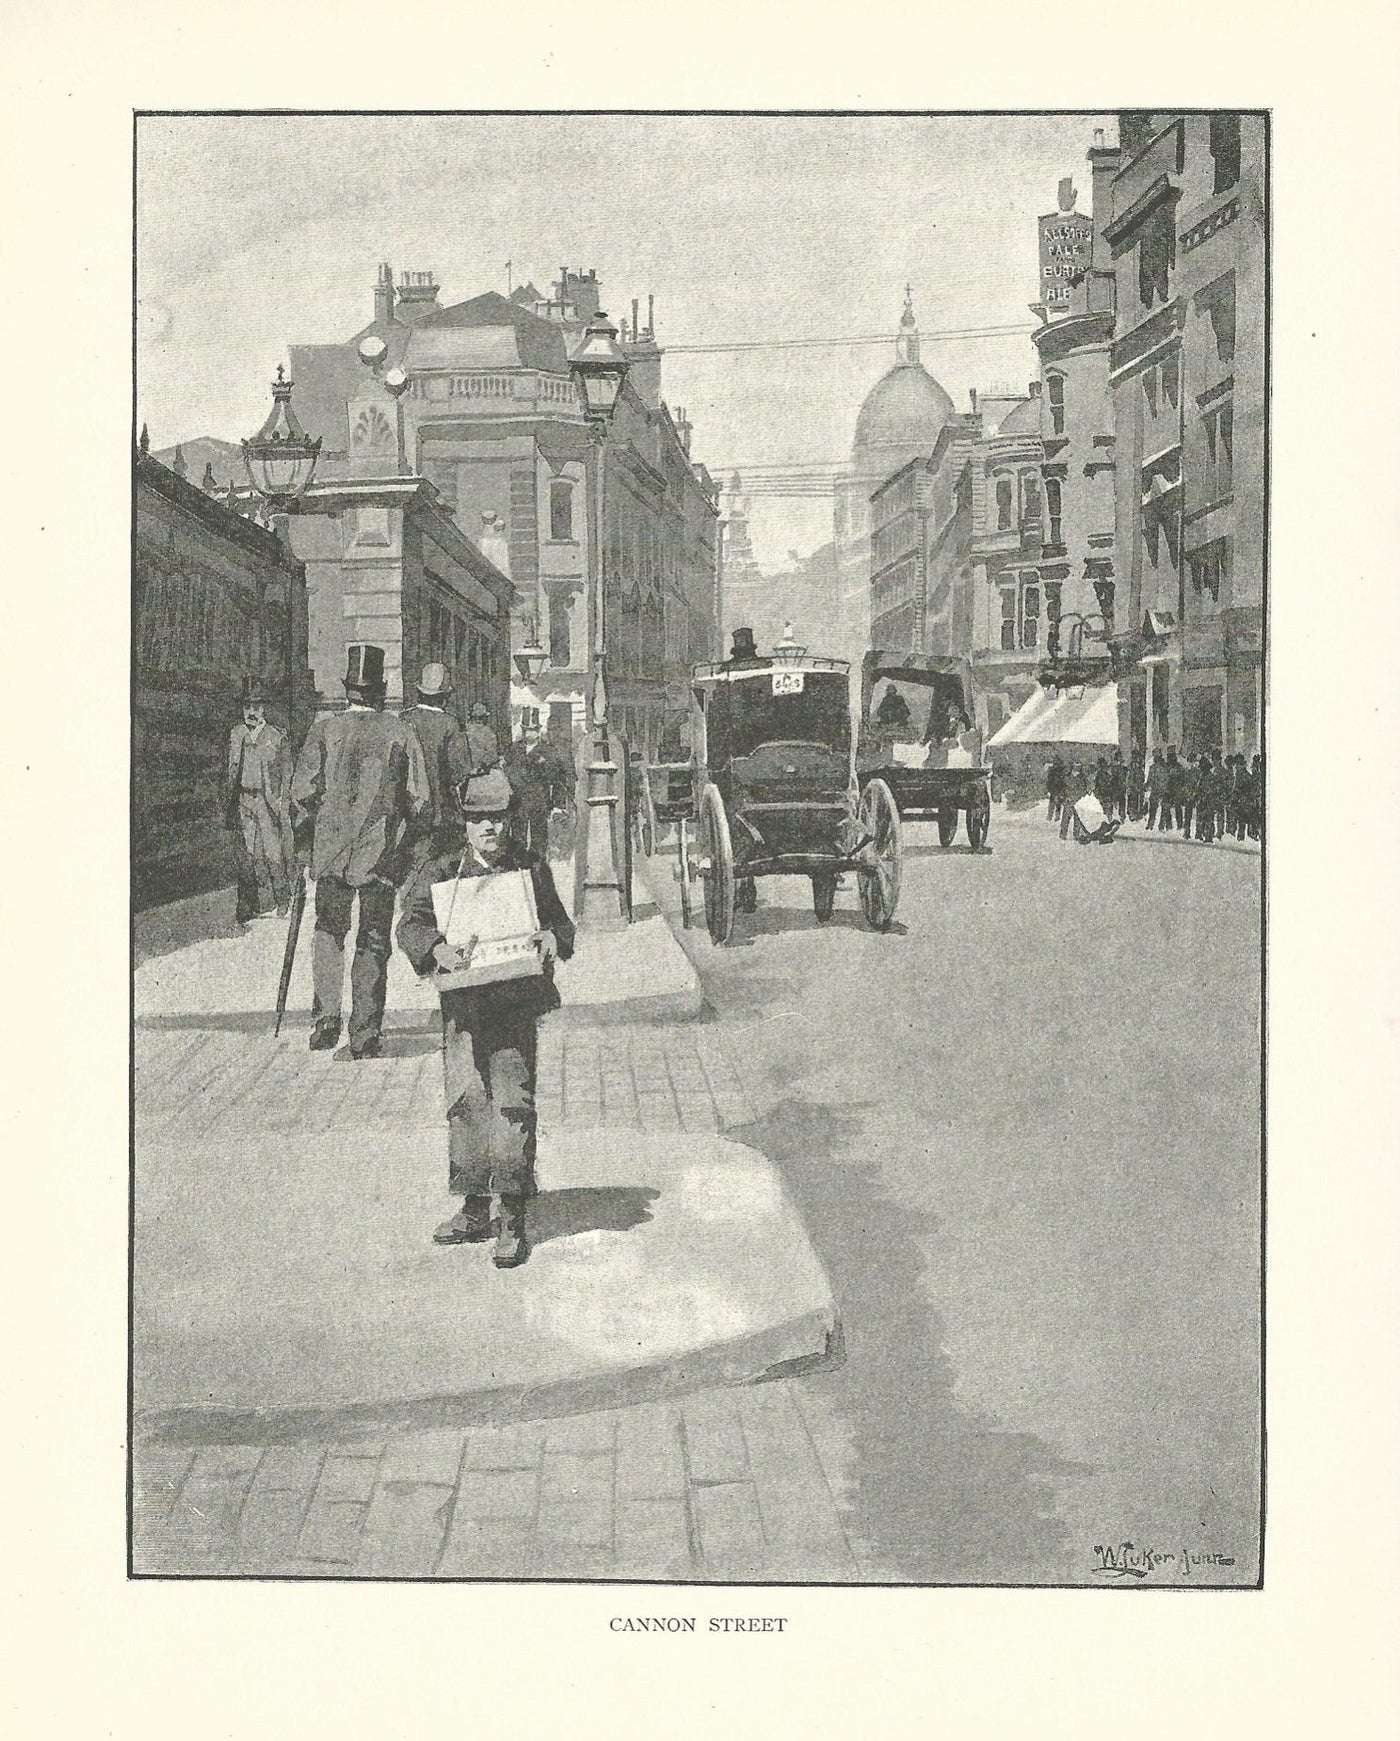 Cannon Street antique print published 1890